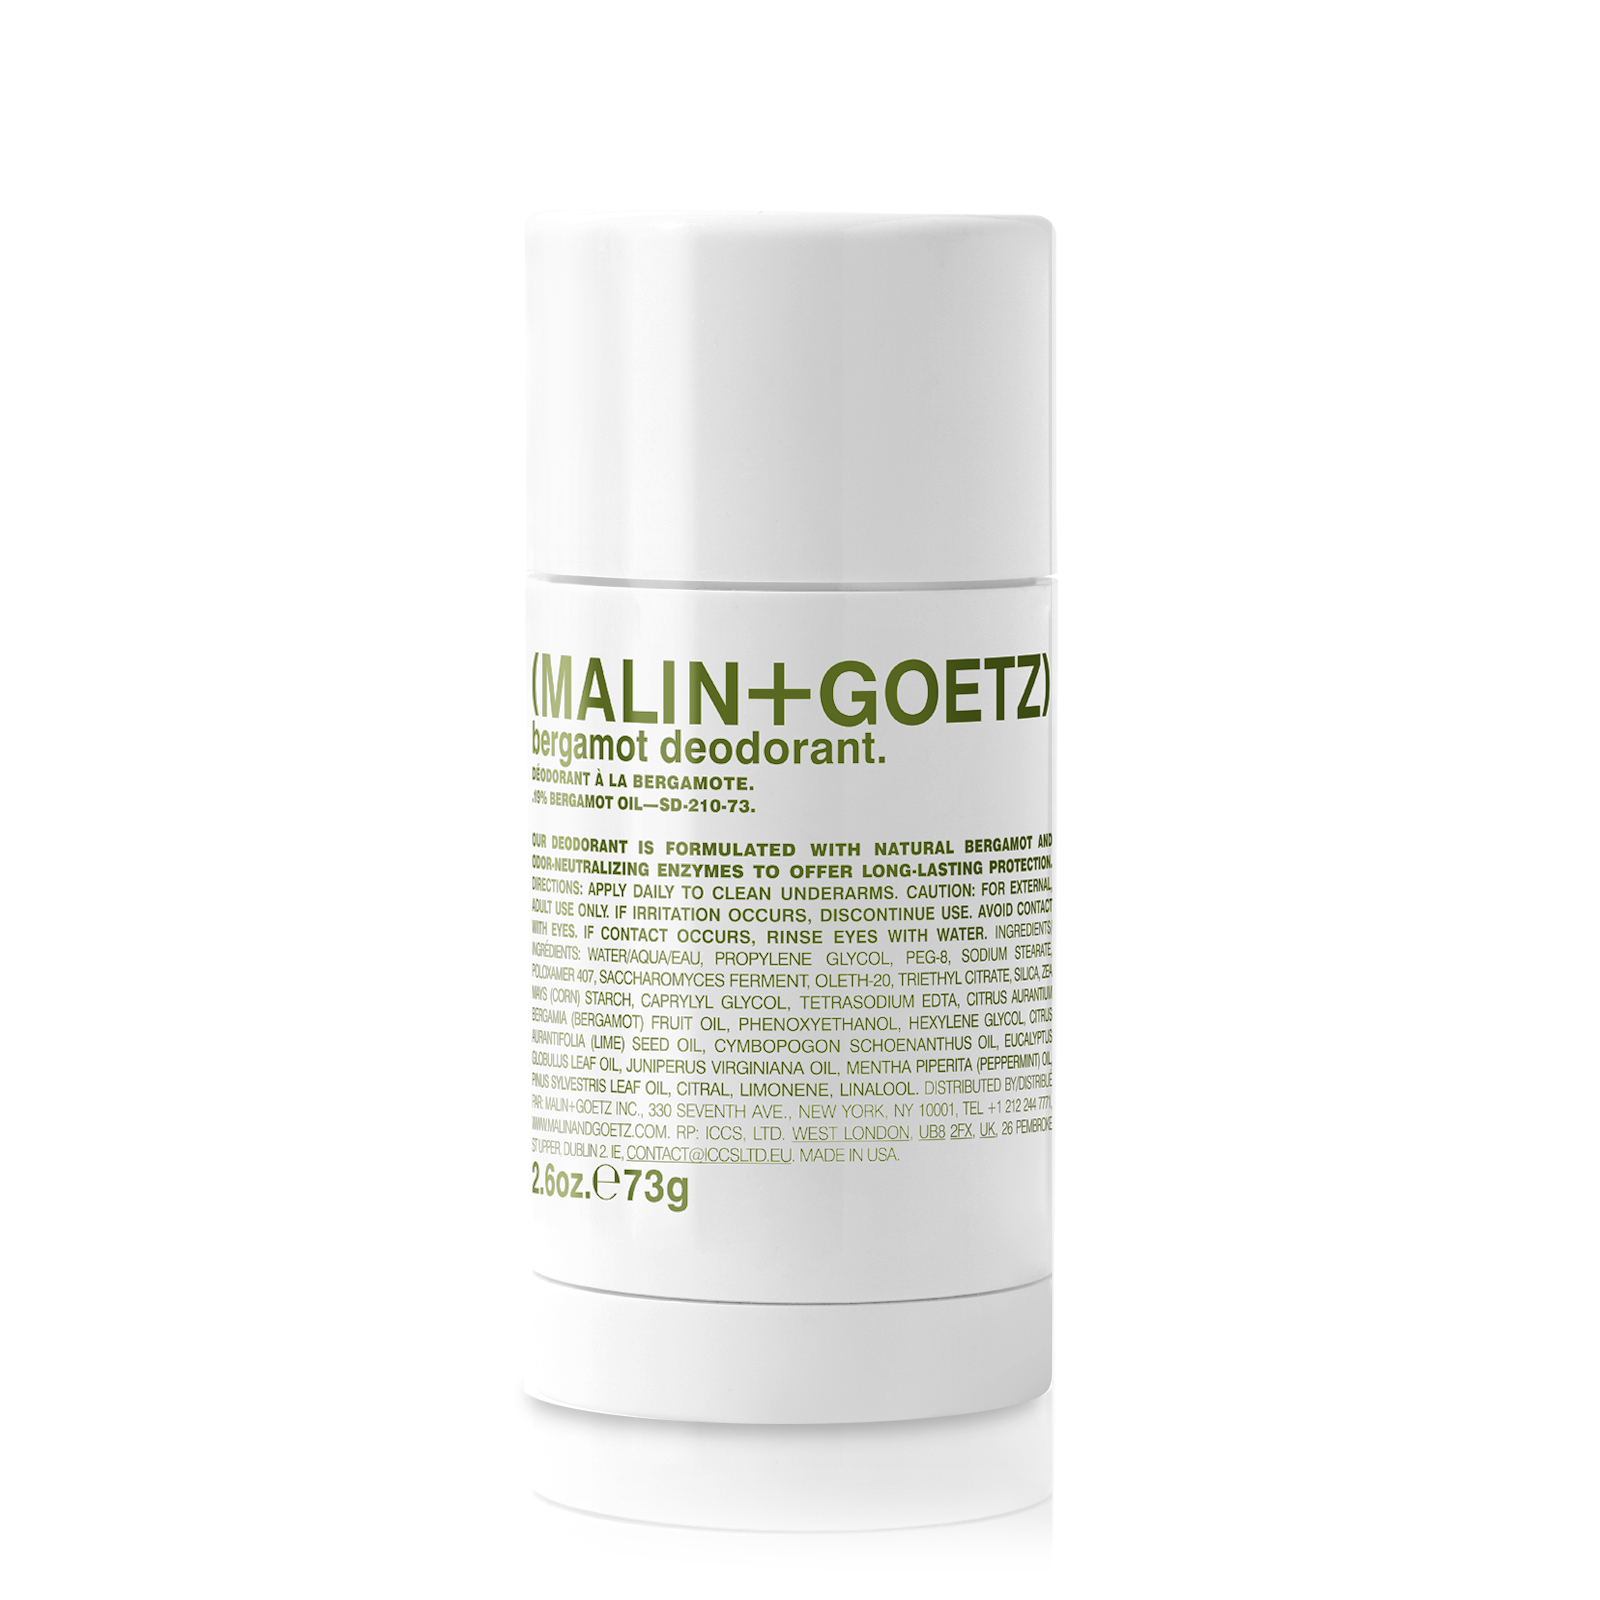 MALIN+GOETZ Bergamot Deodorant